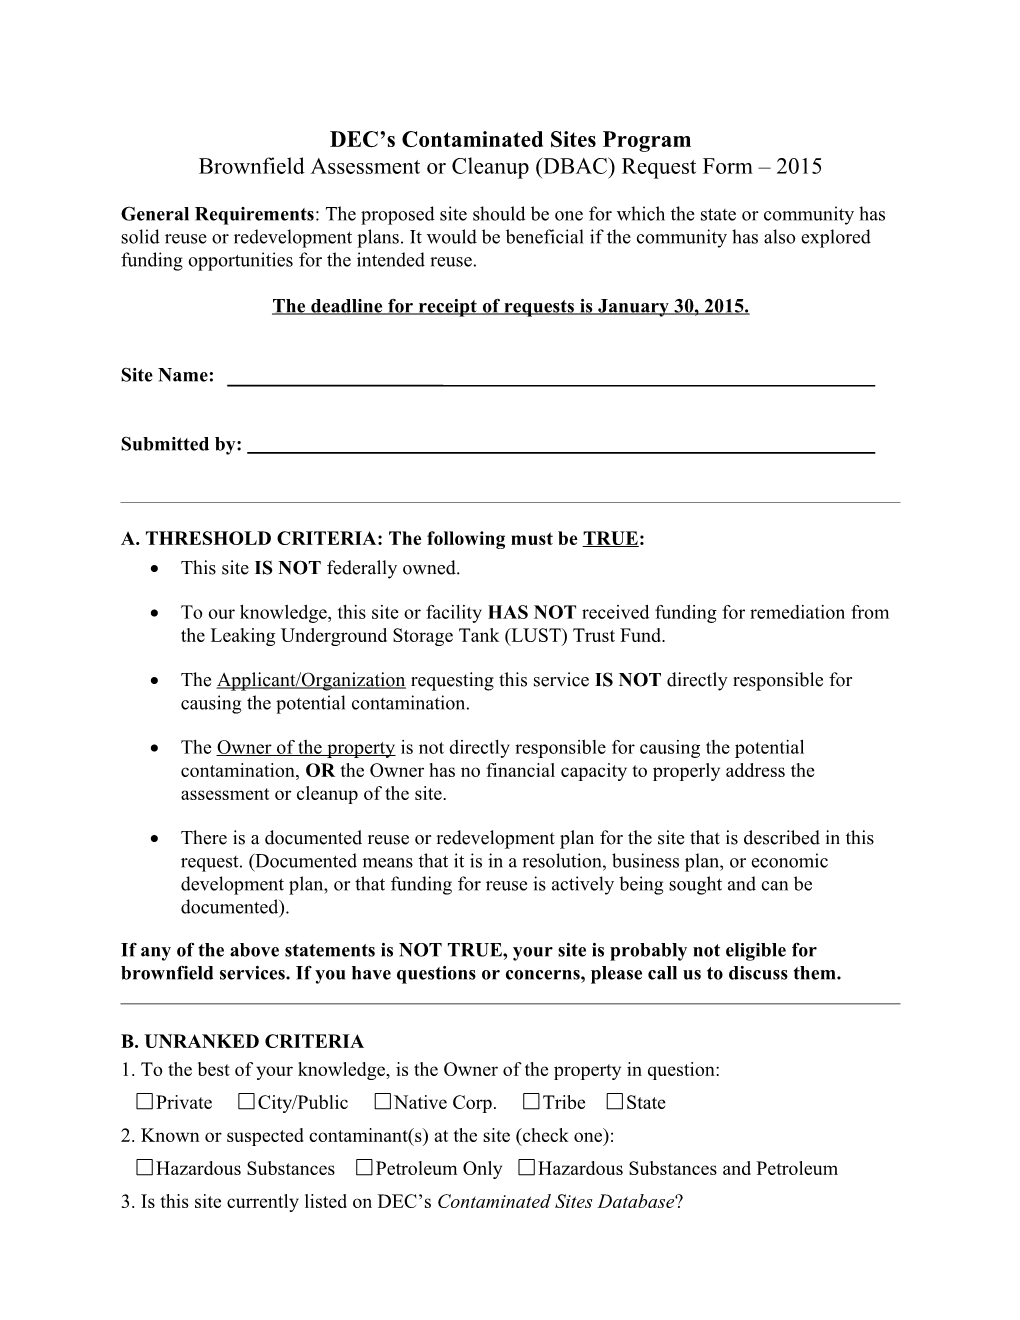 DEC Brownfield Assessment Or Cleanup Request Formfy2016